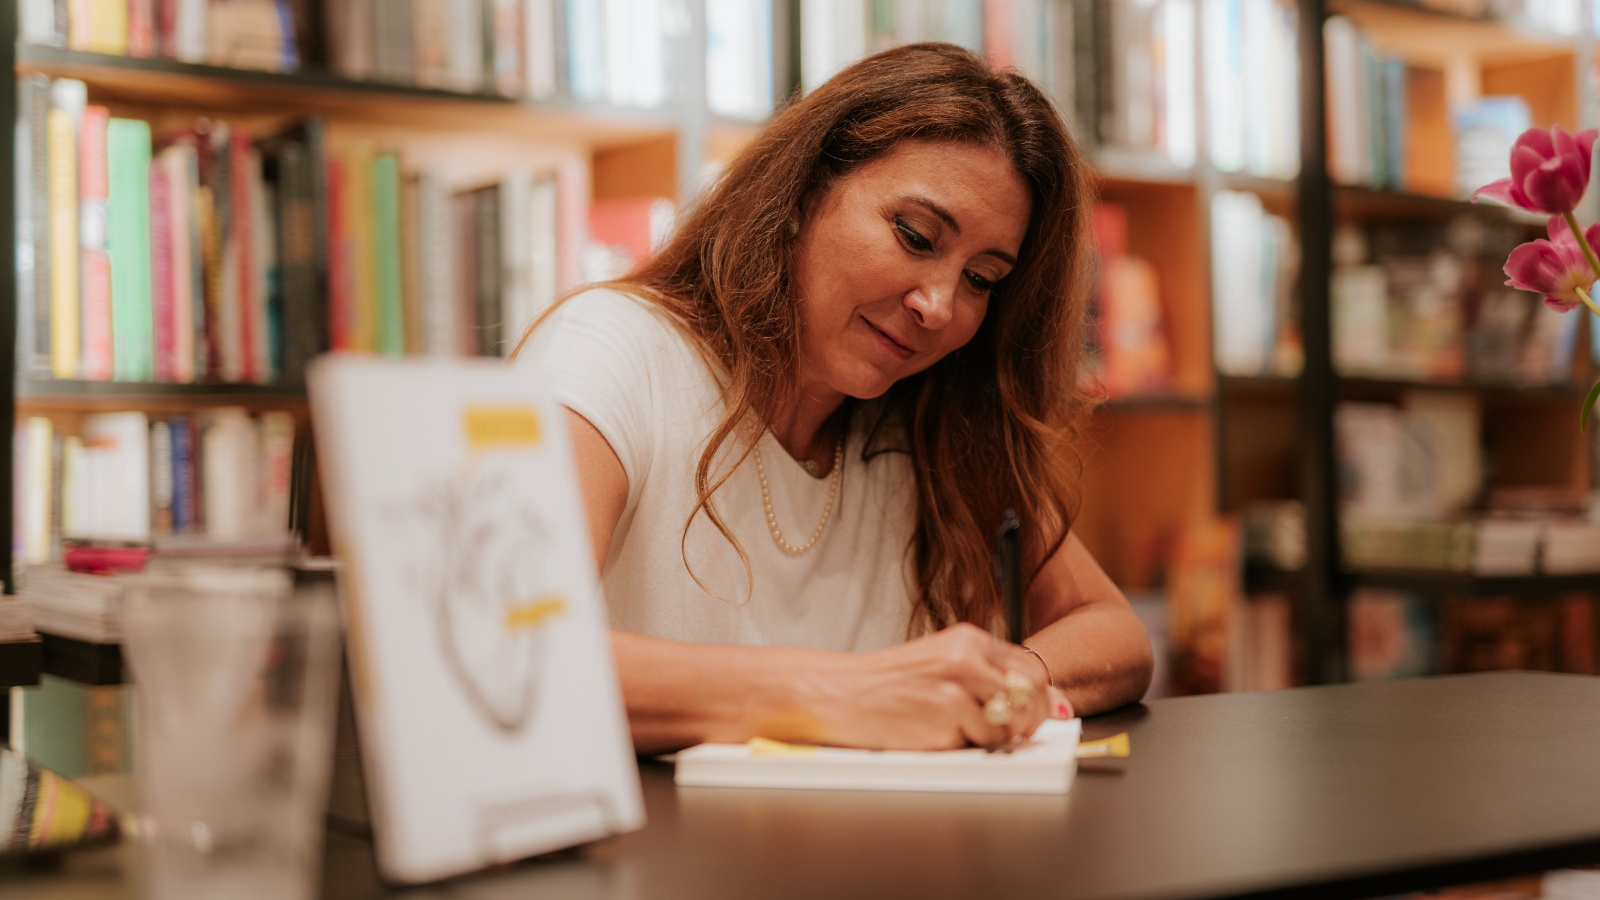 Psicanalista Fabiana Guntovitch lança livro